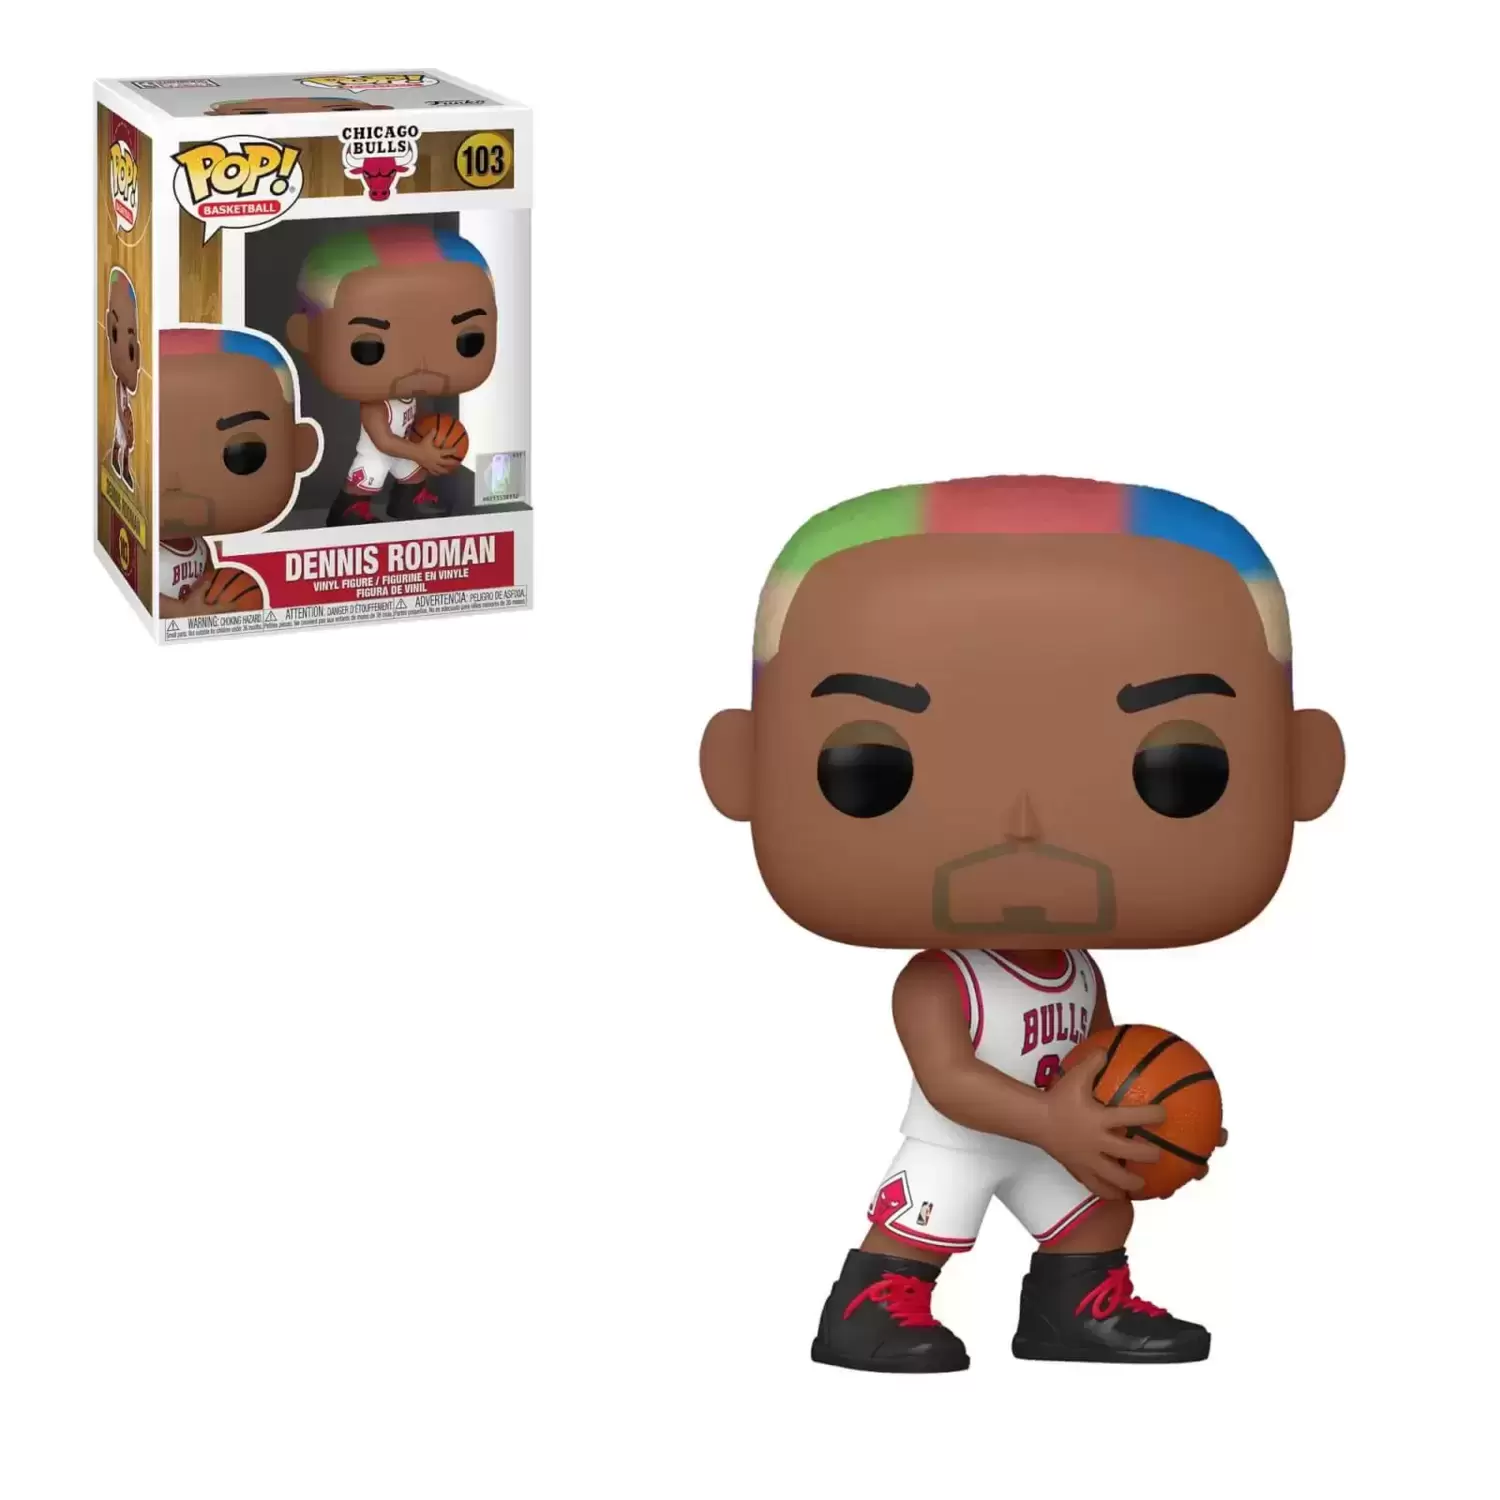 POP! Sports/Basketball - Bulls - Dennis Rodman